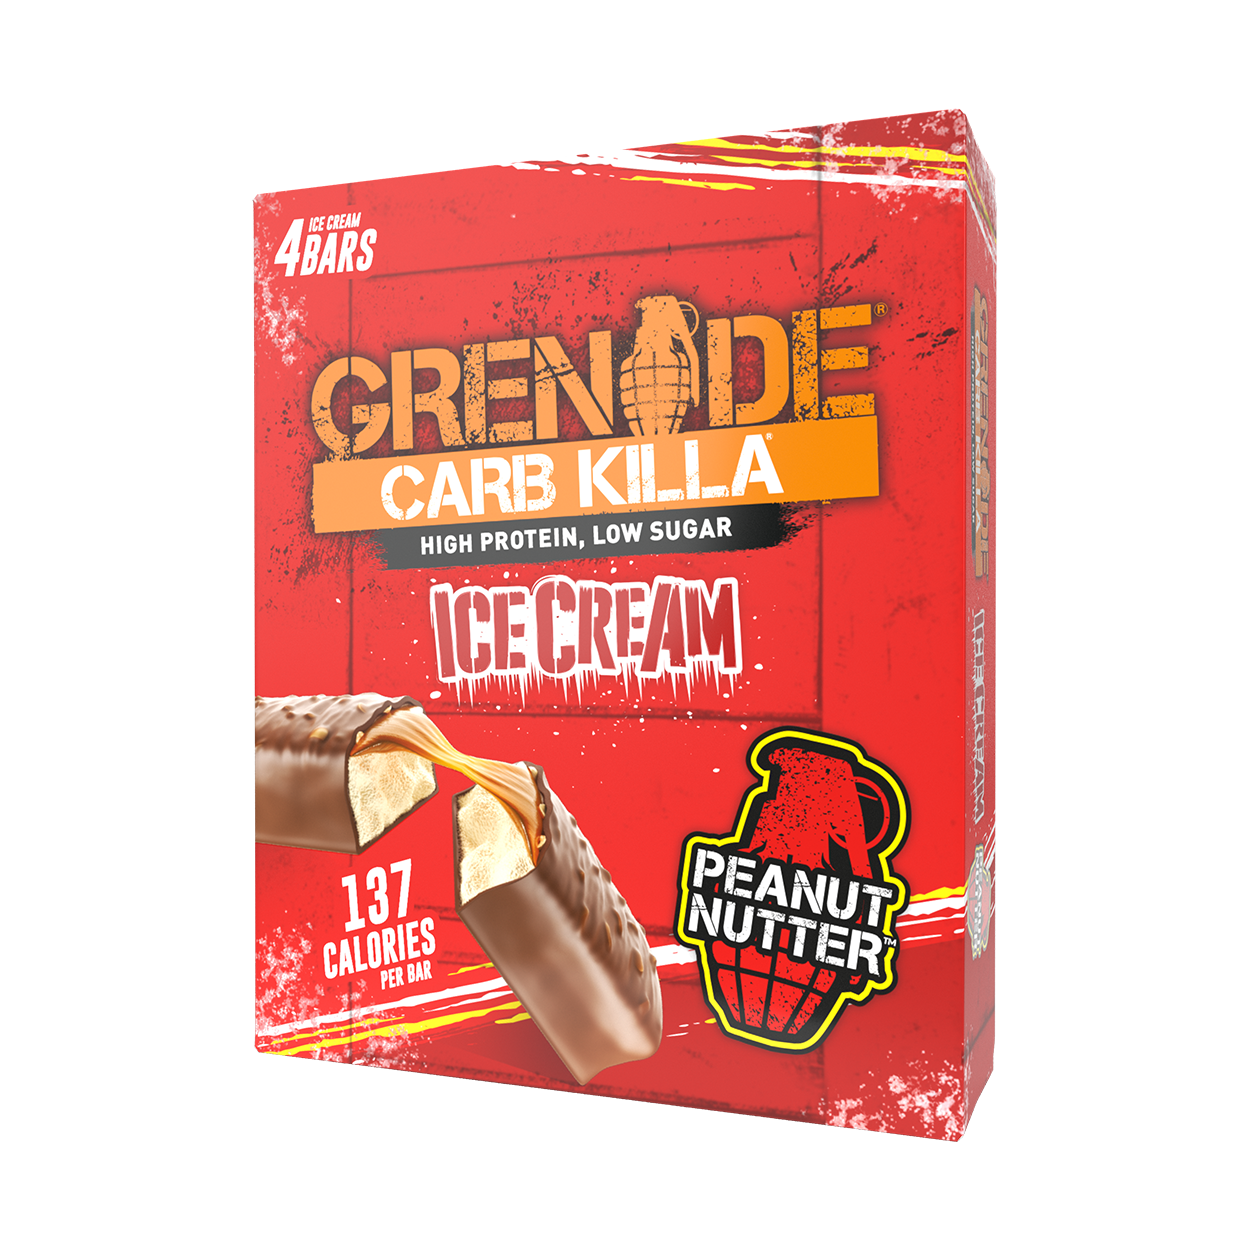 Grenade launch low sugar, high protein Carb Killa ice cream